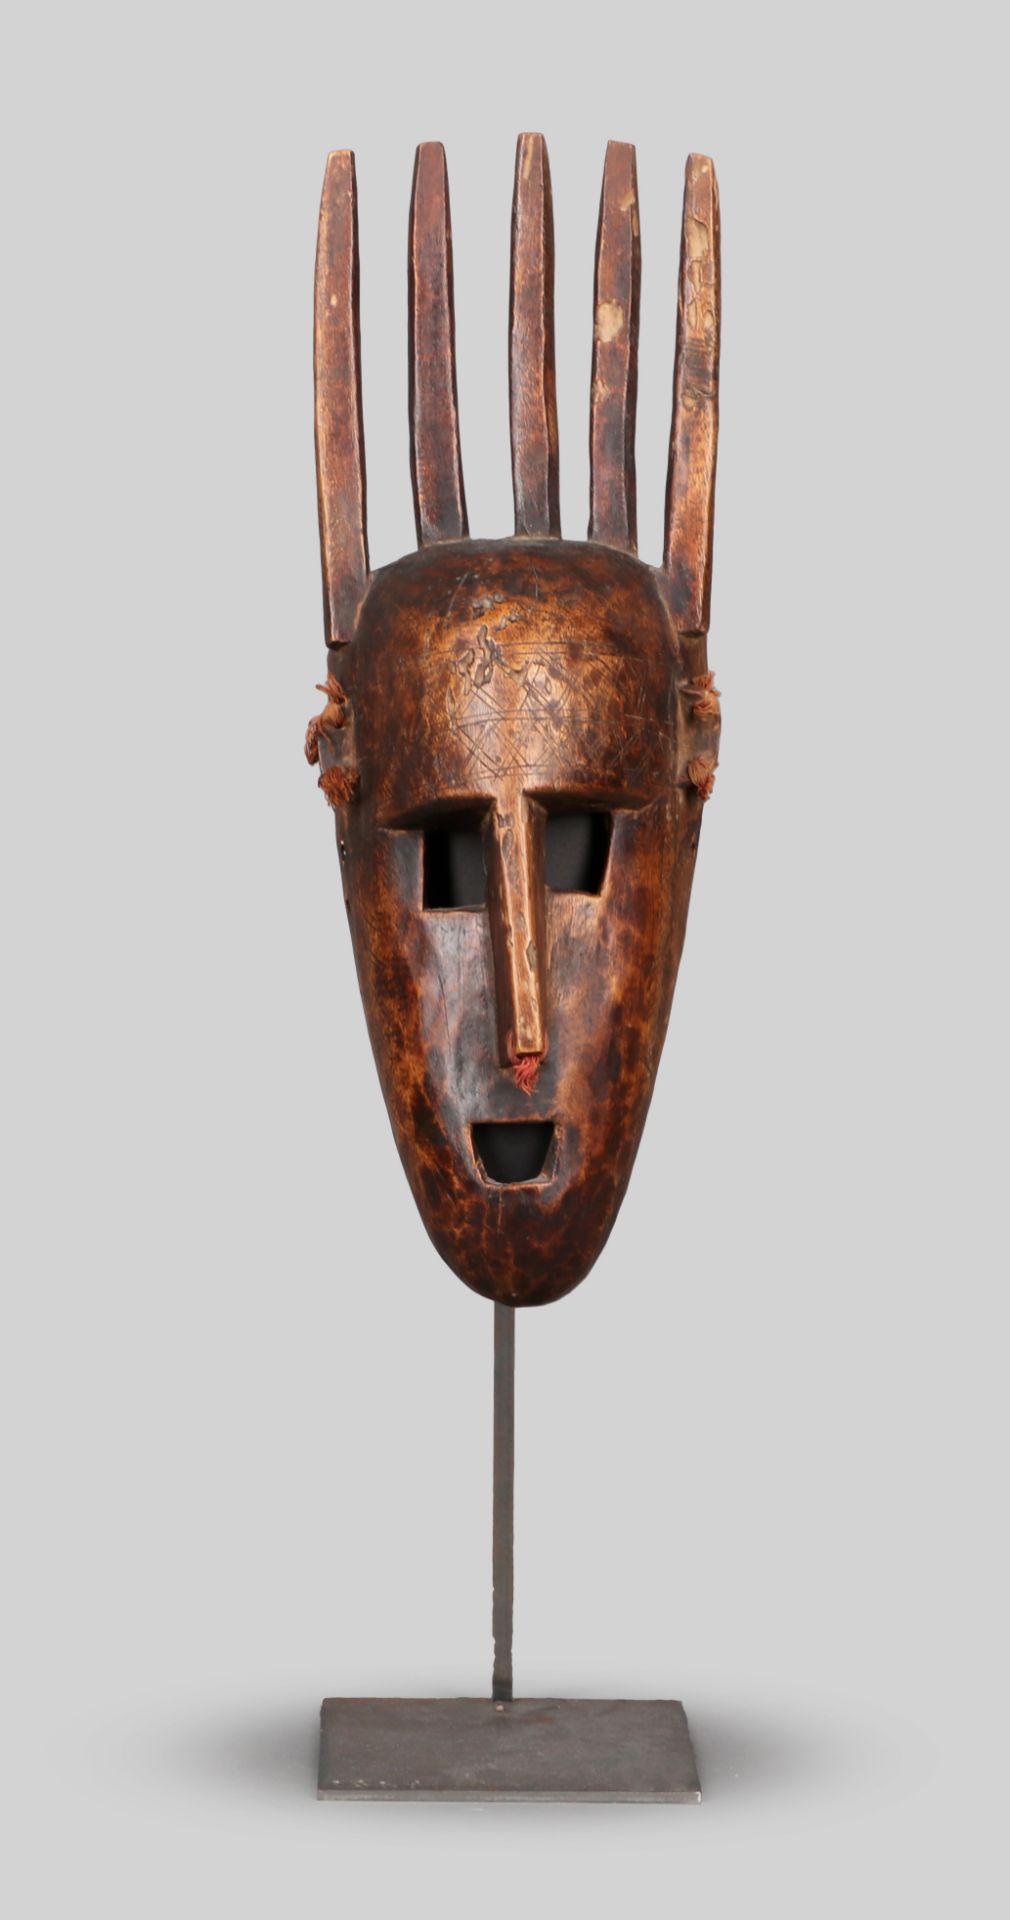 Ntomo-Maske, Bambara, Mali